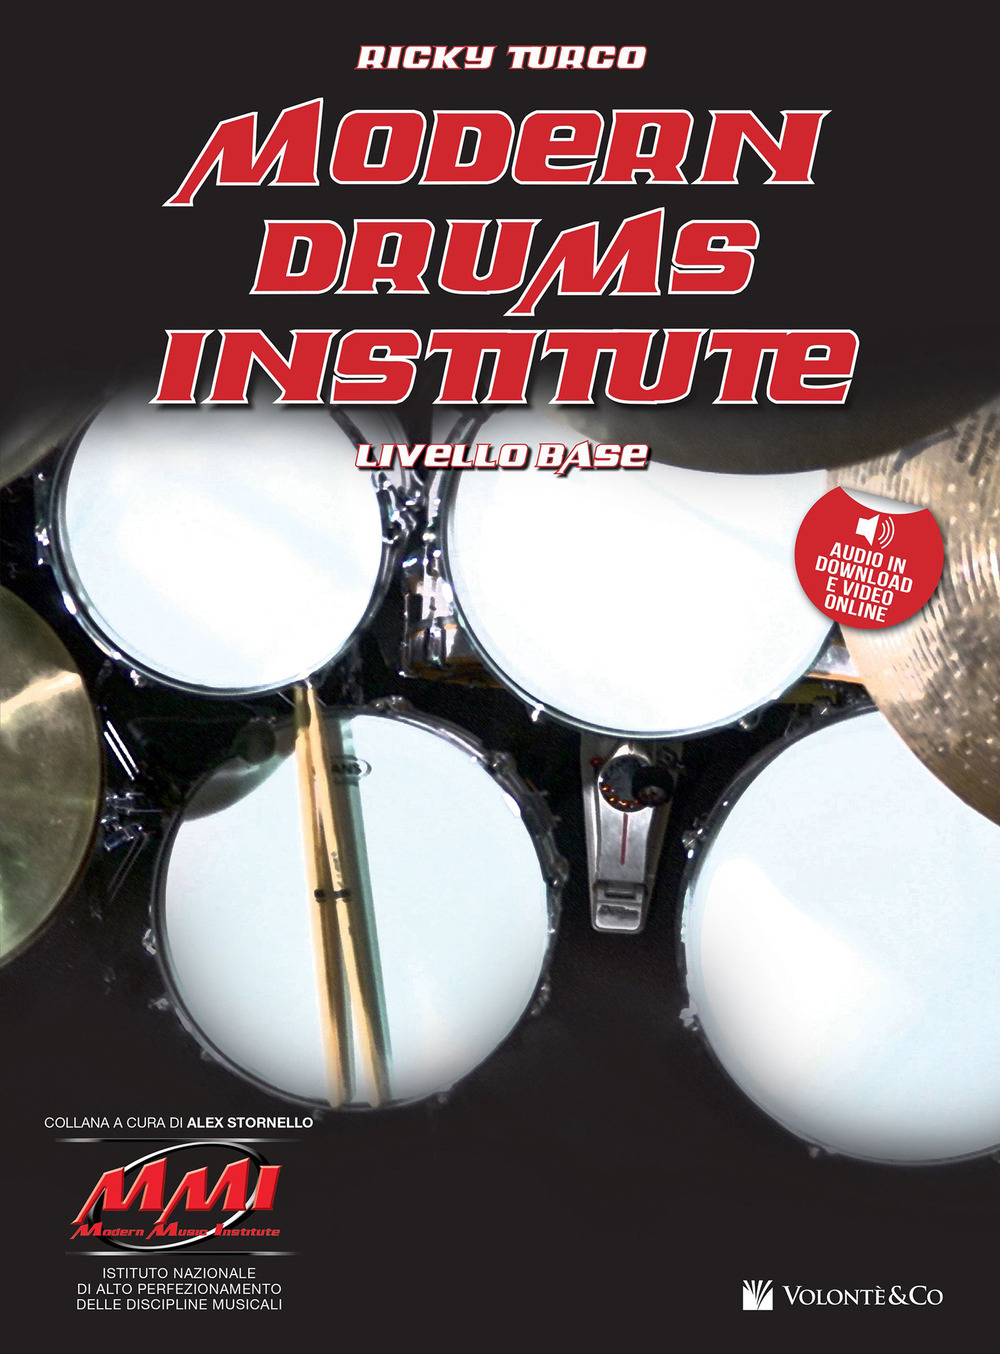 Modern drums institute. Livello base. Con Audio in download. Con Video online